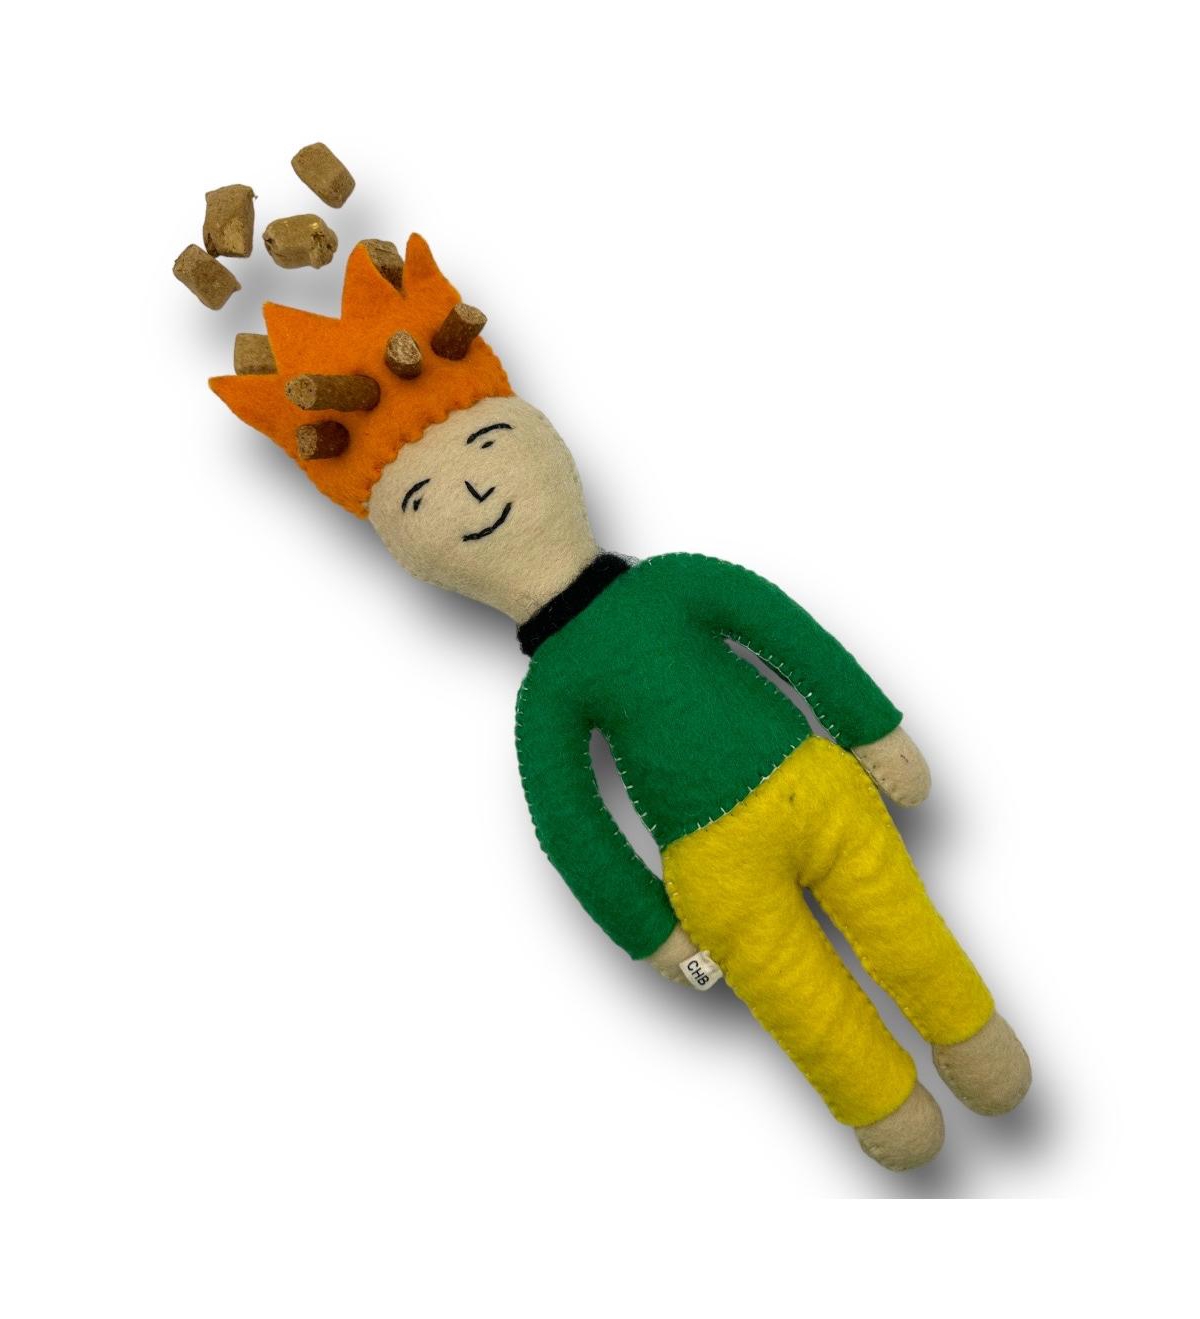 Prince Felt Dog Toy - Green and orange